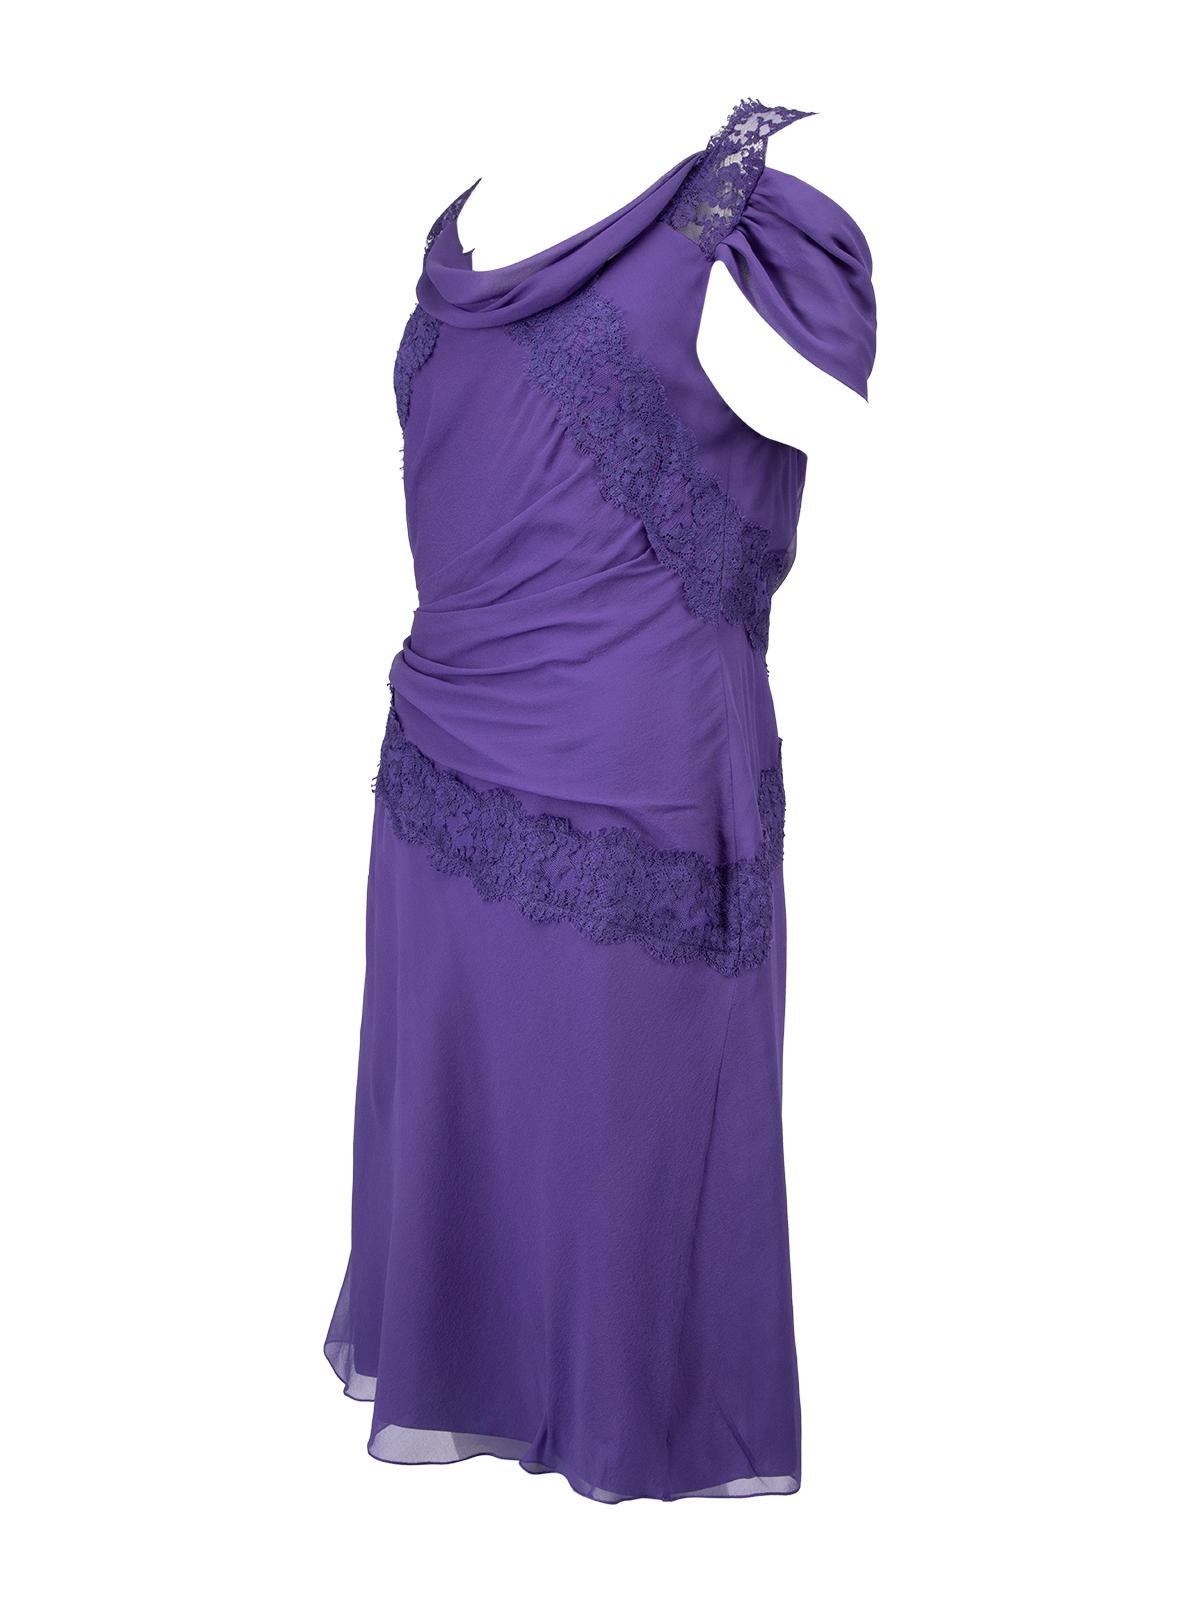 Pre-Loved Alberta Ferretti Women's Multi Layer Round Neck Dress with Lace Detail 1